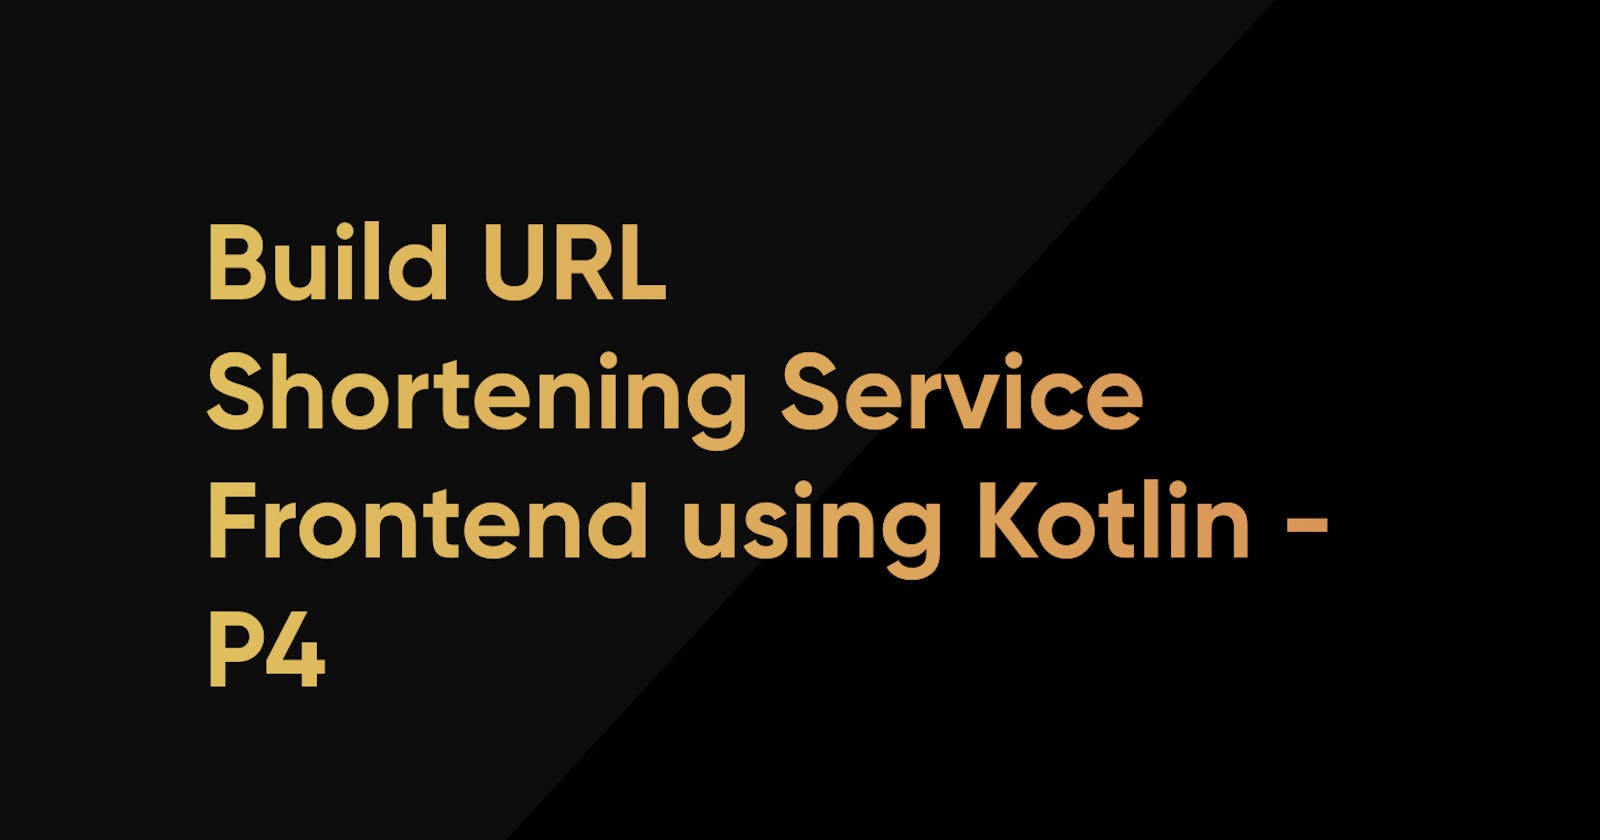 Building URL Shortening Service frontend - P4